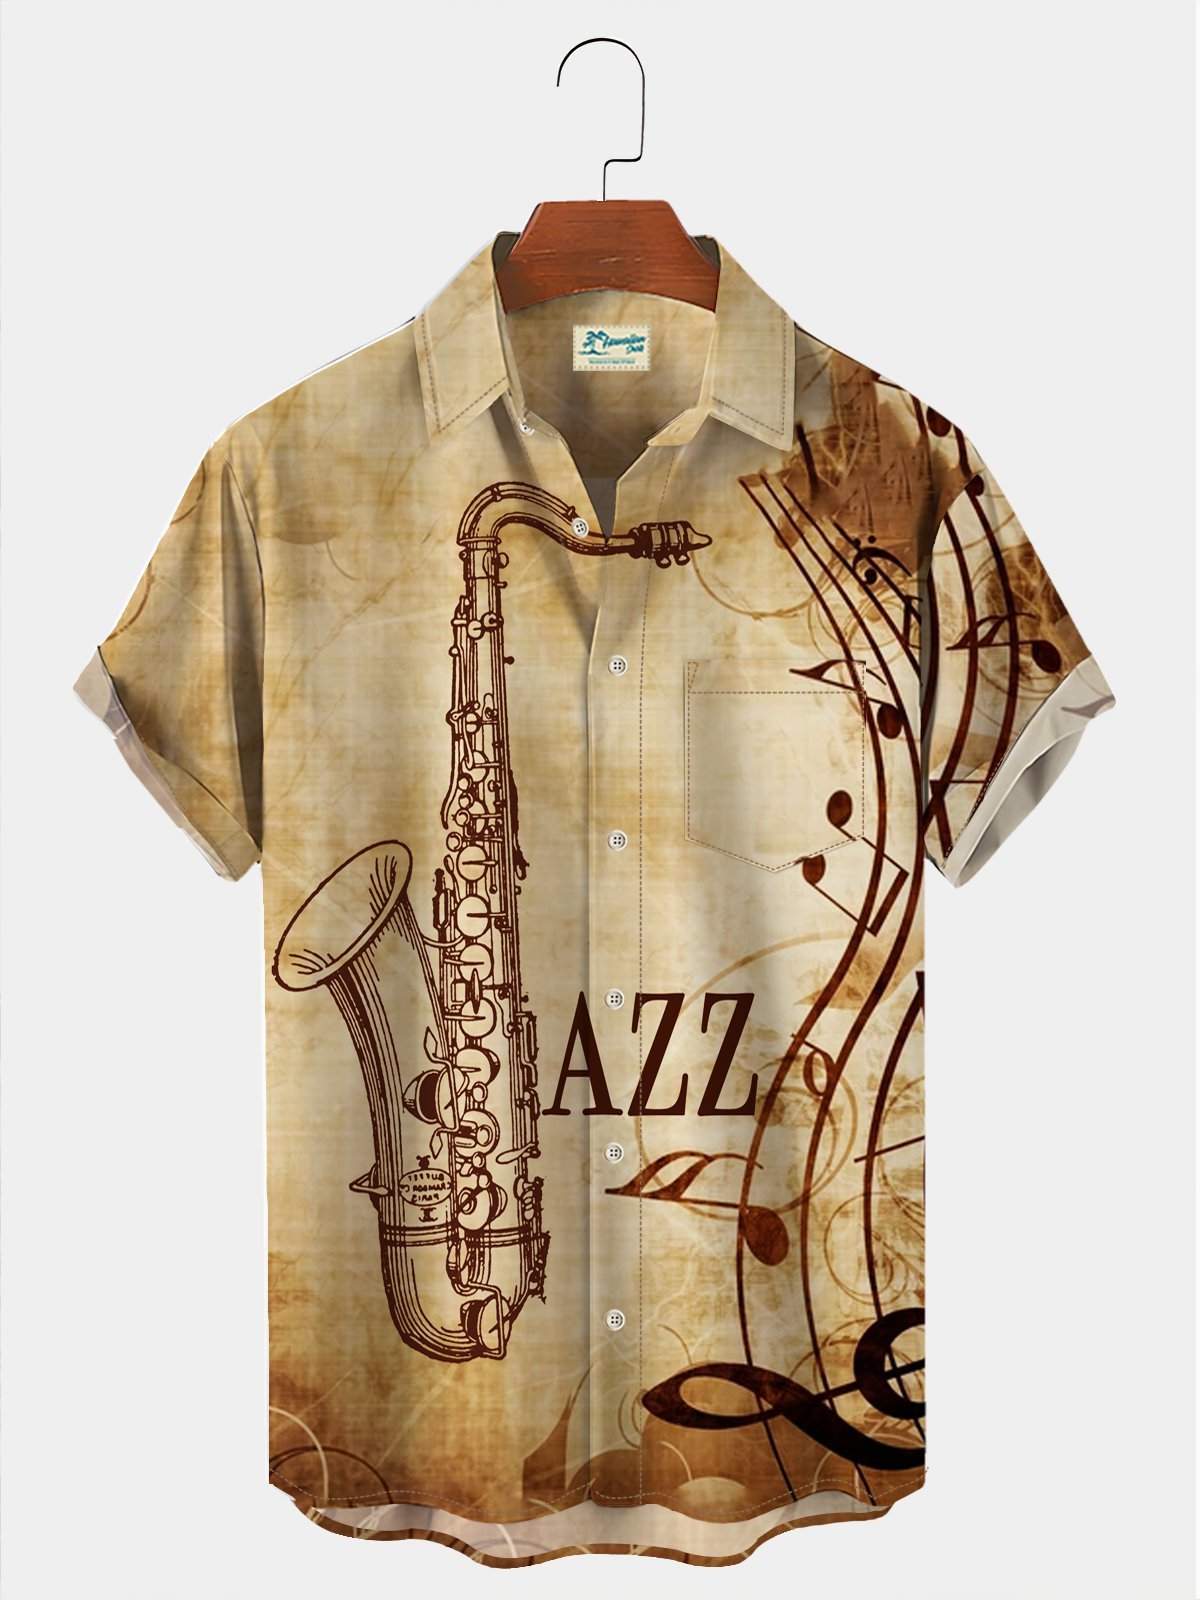 Royaura Men's Vintage Hawaiian Shirts Jazz Sax Note Art Seersucker Wrinkle Free Aloha Shirts